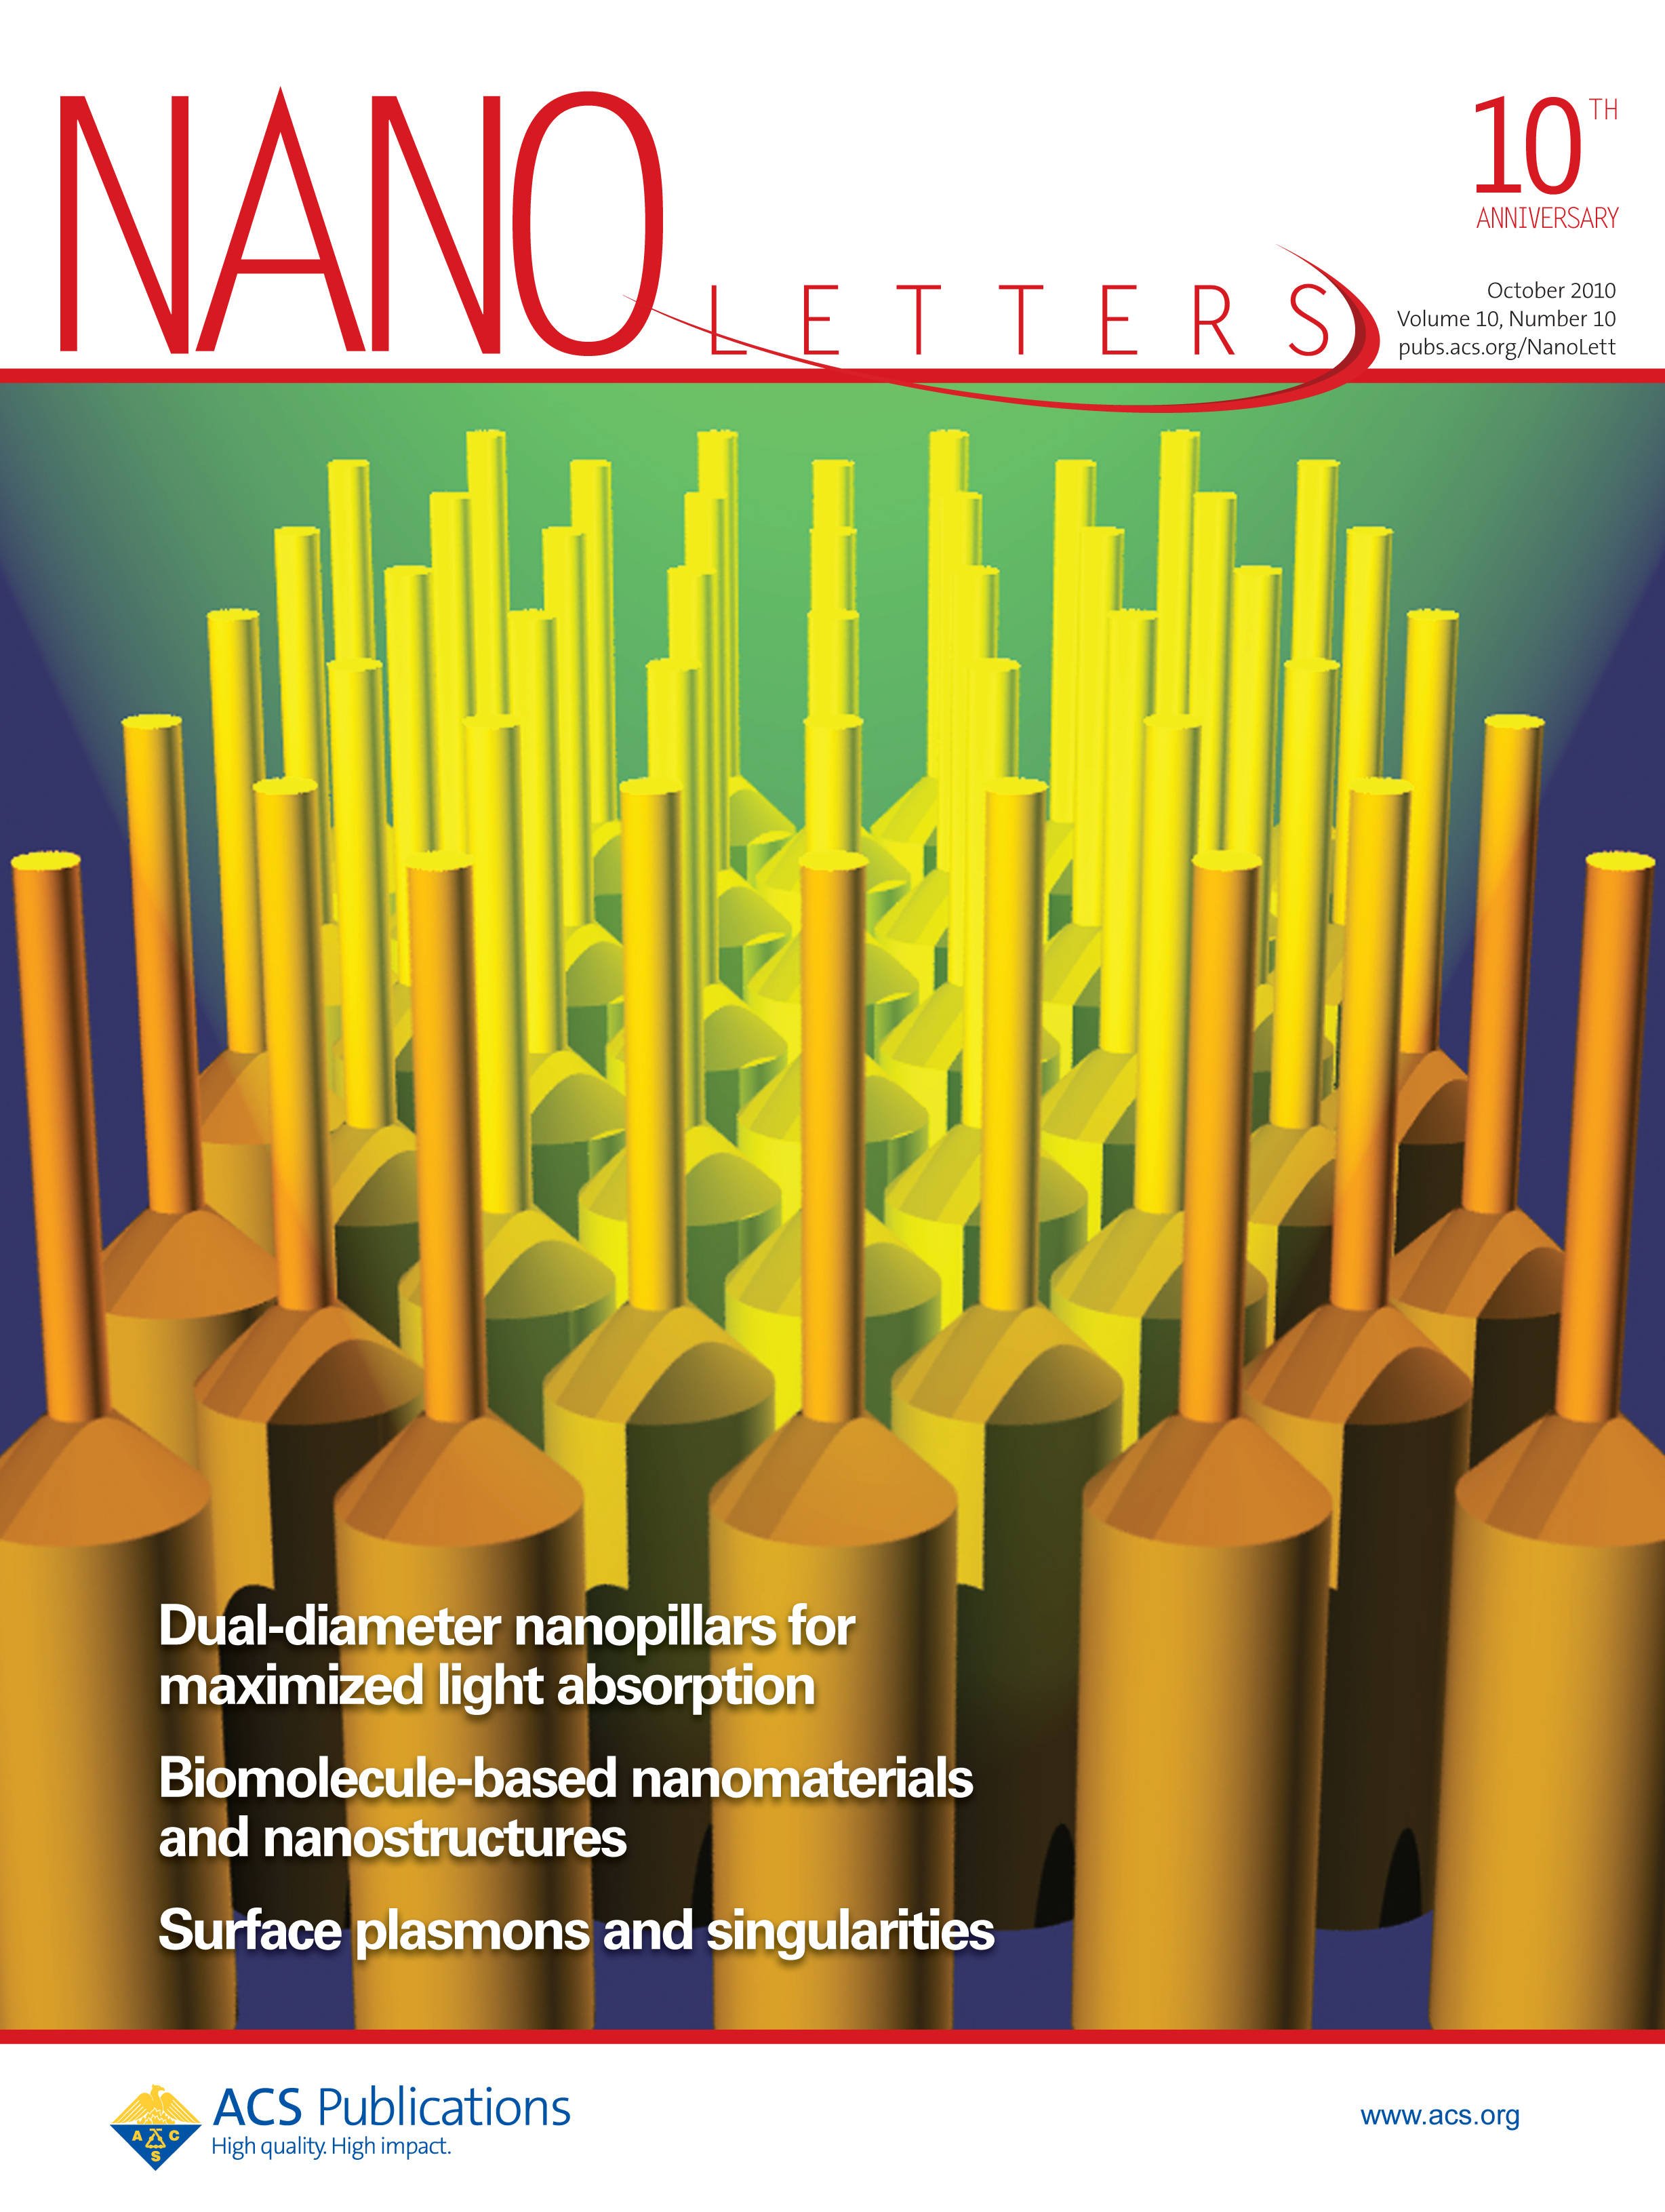 Nano letters cover letter